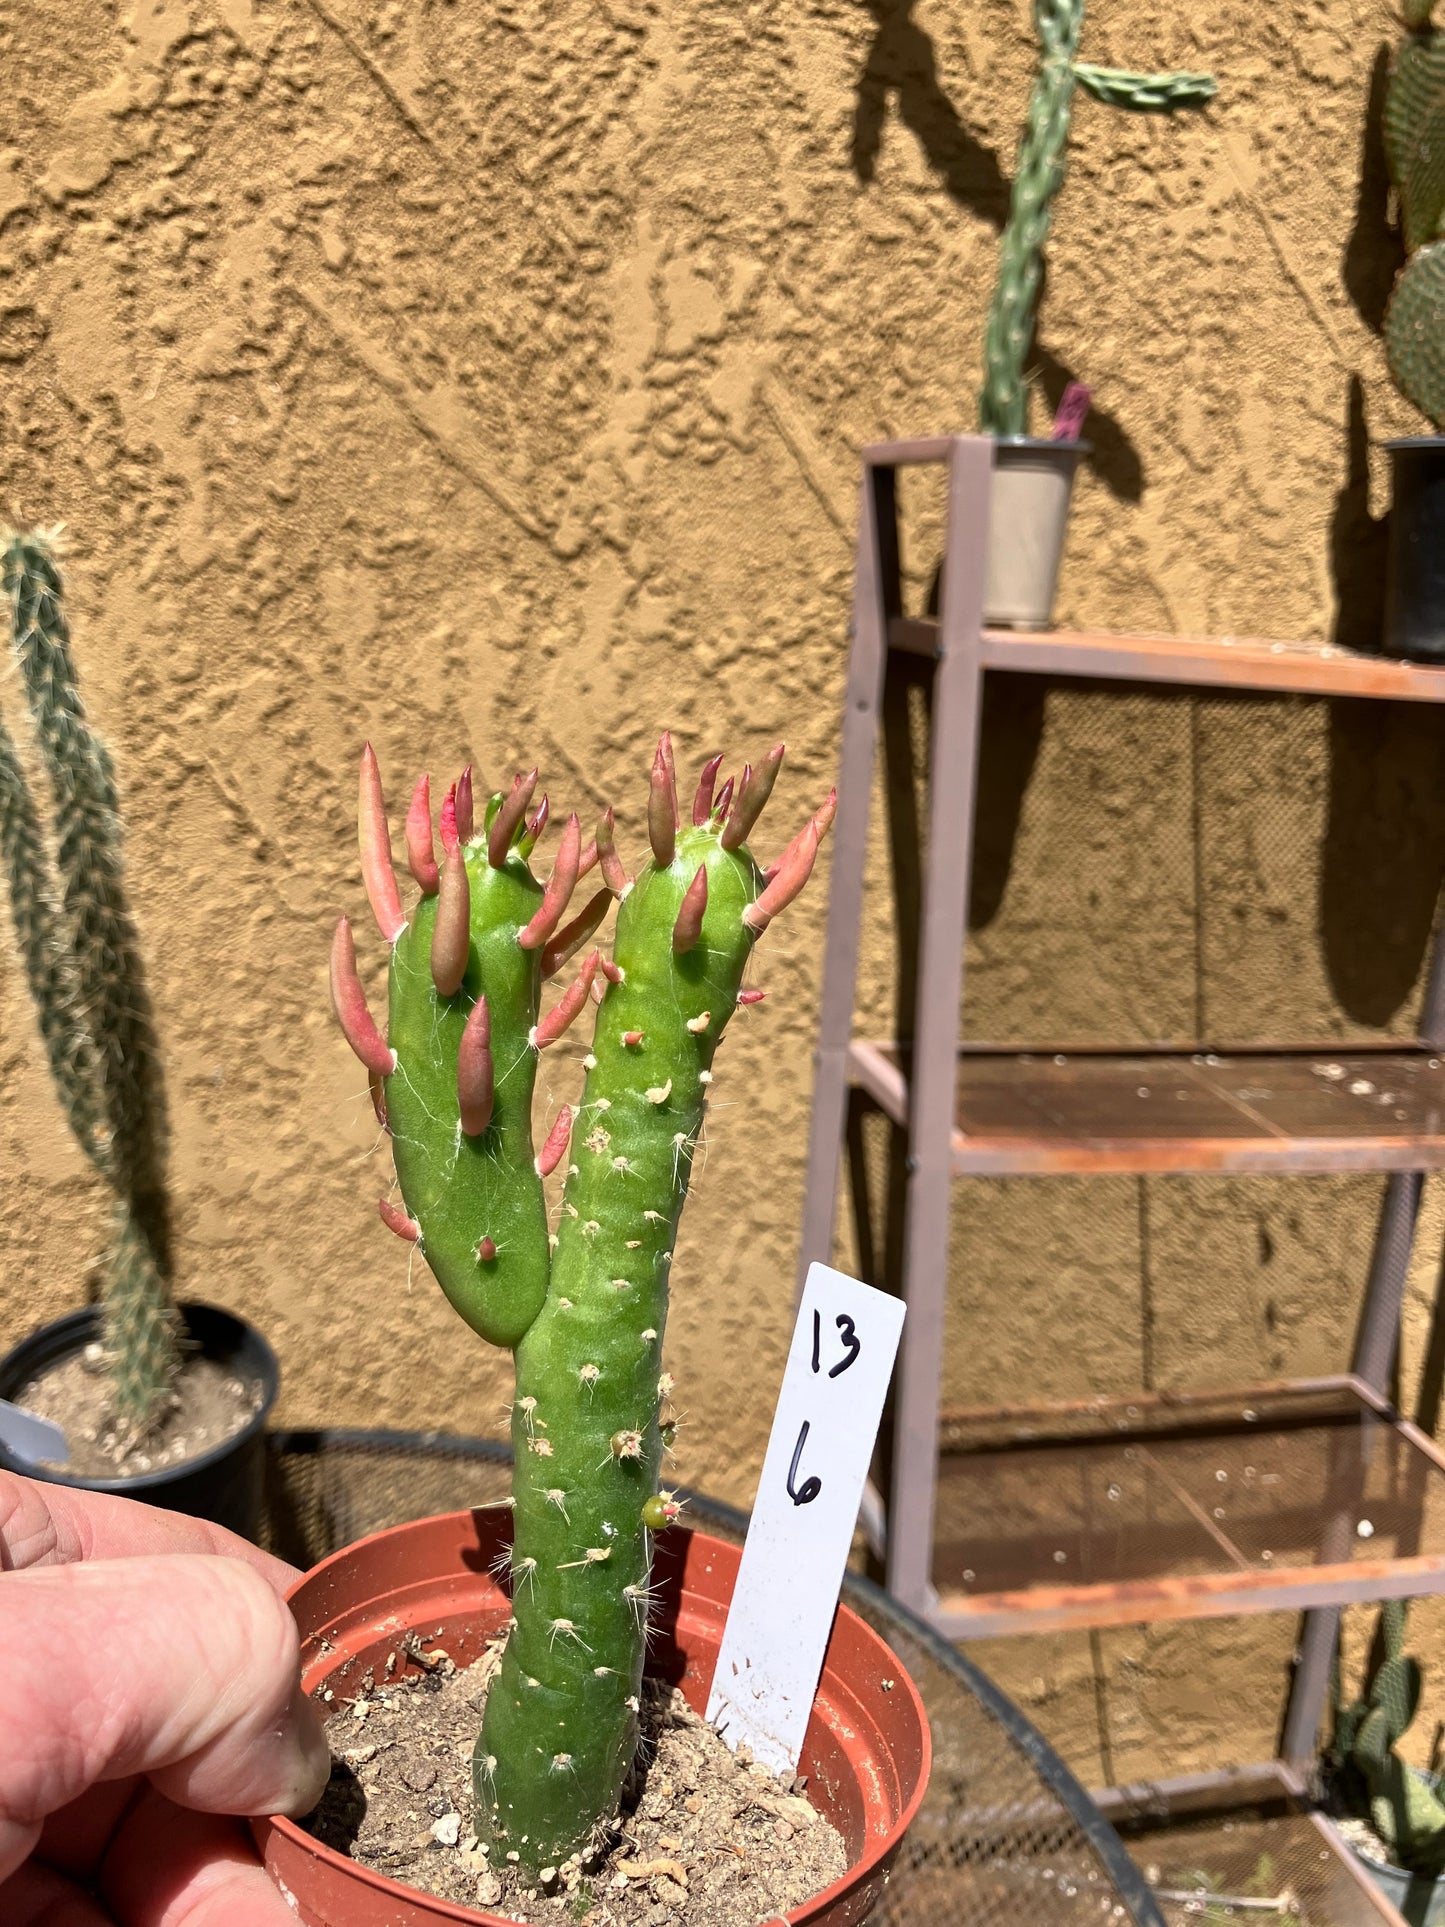 Austrocylindropuntia Cactus Gumbi Mini Eve's Needle 6"Tall #13W